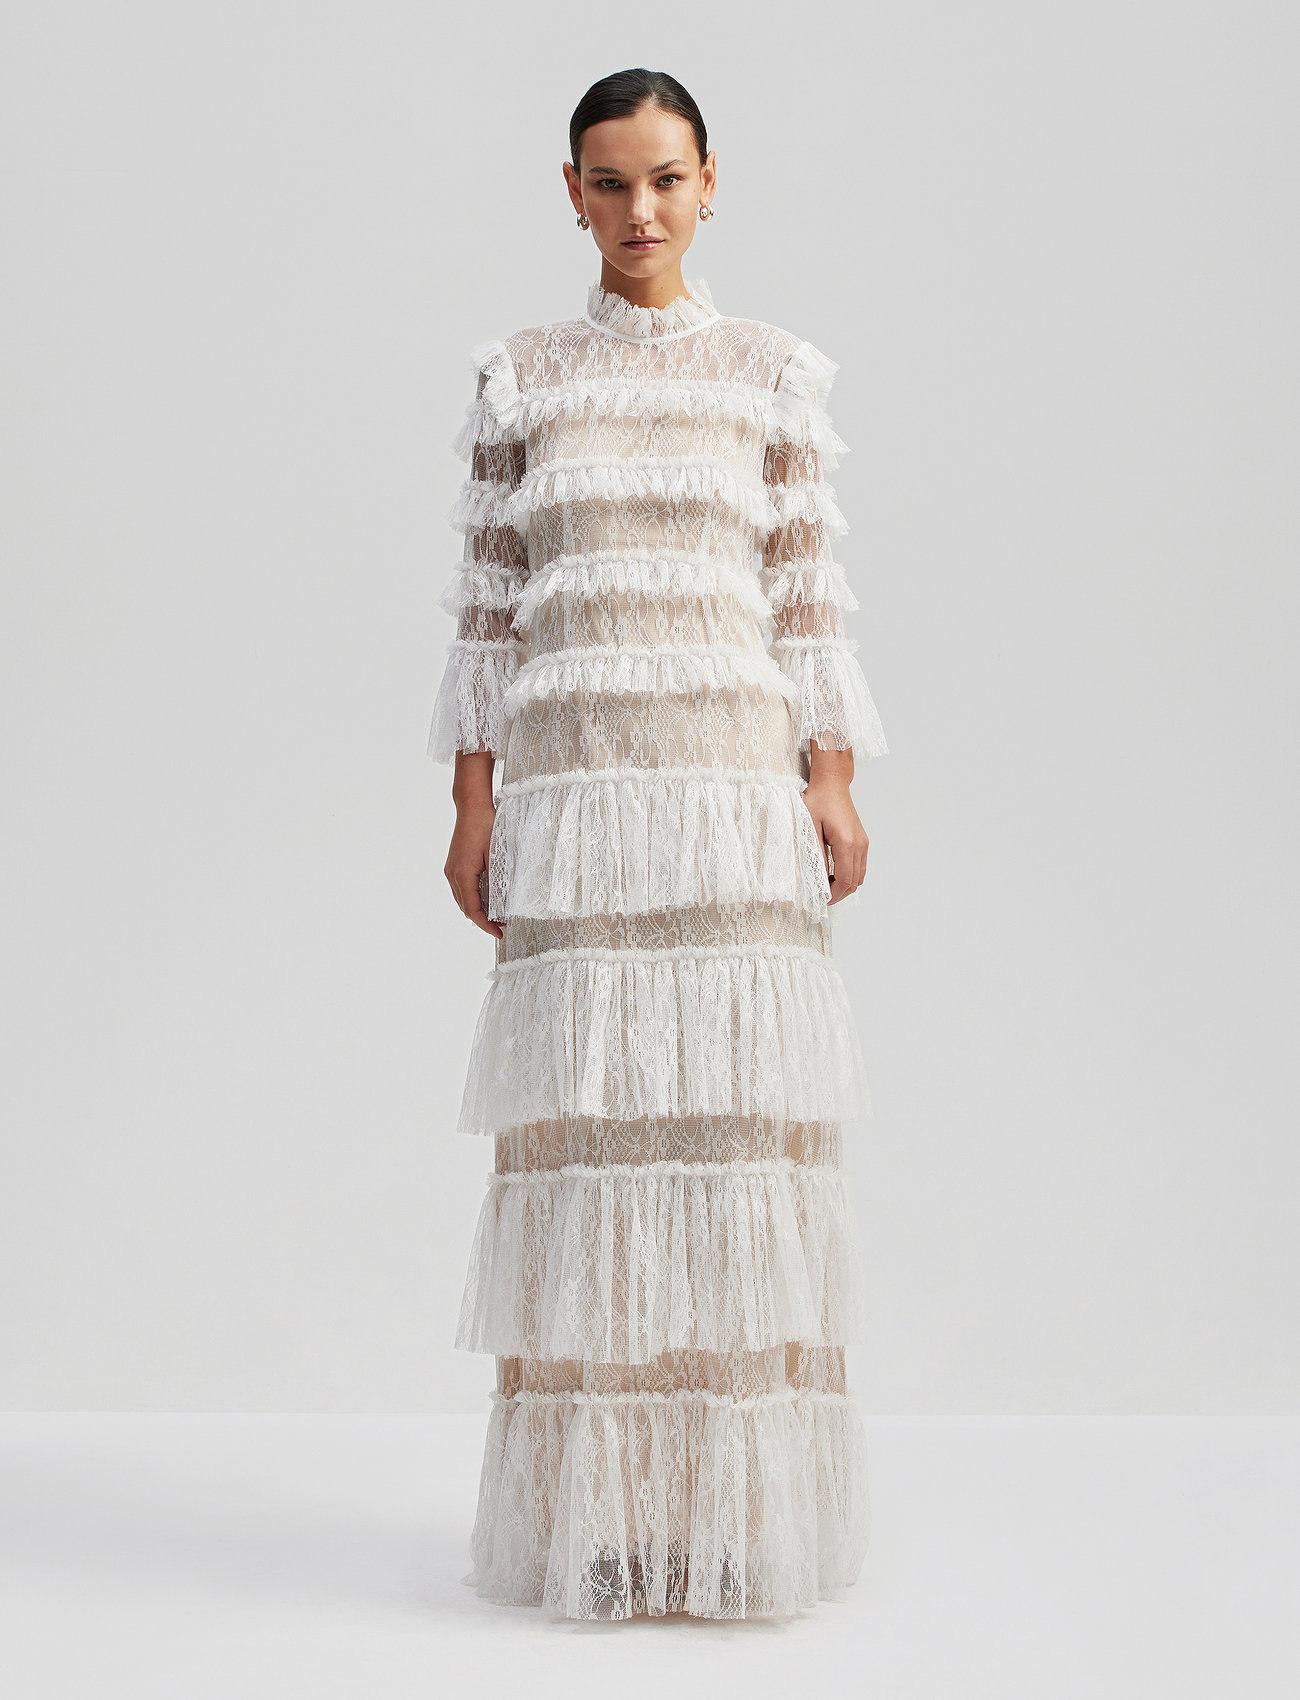 Malina - Carmine long sleeve maxi lace dress - aftenkjoler - cloudy white - 0